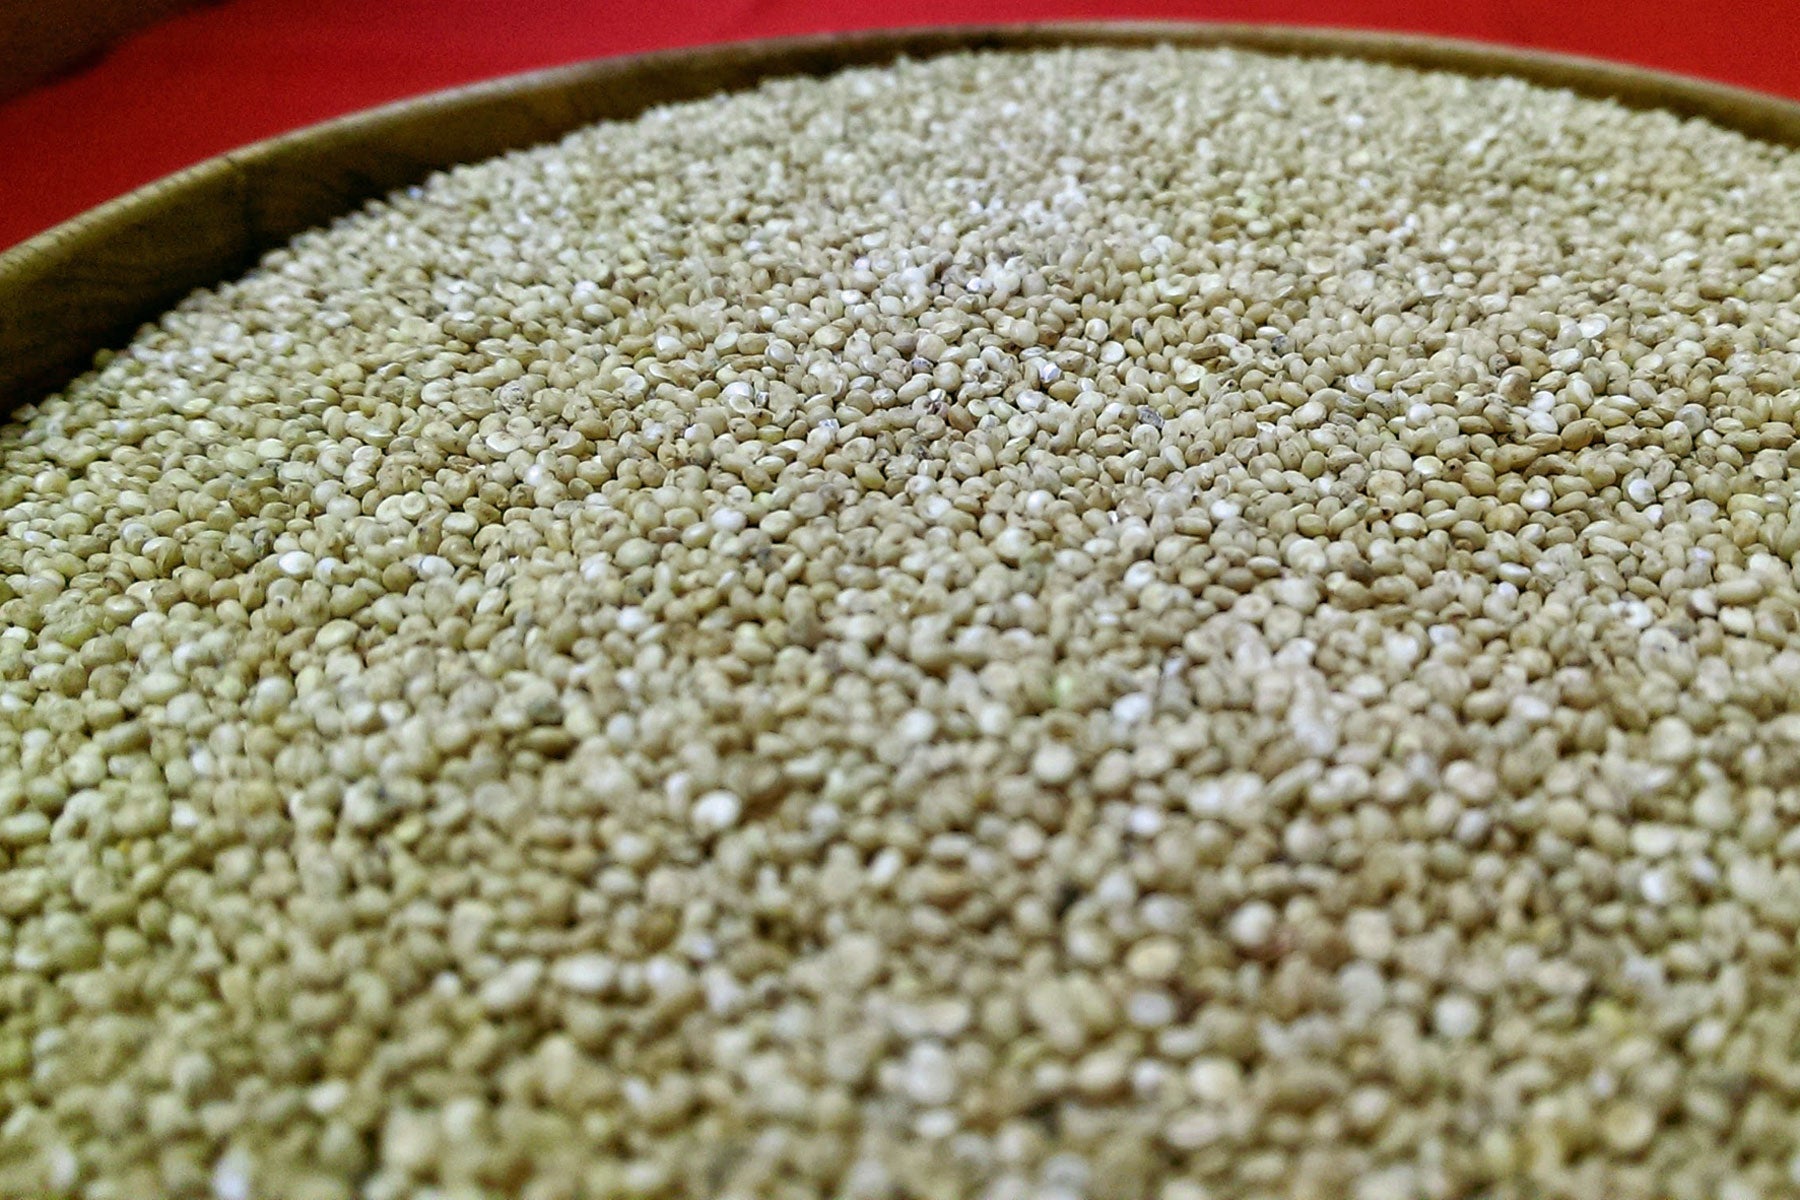 British-grown quinoa grain, ready for cooking